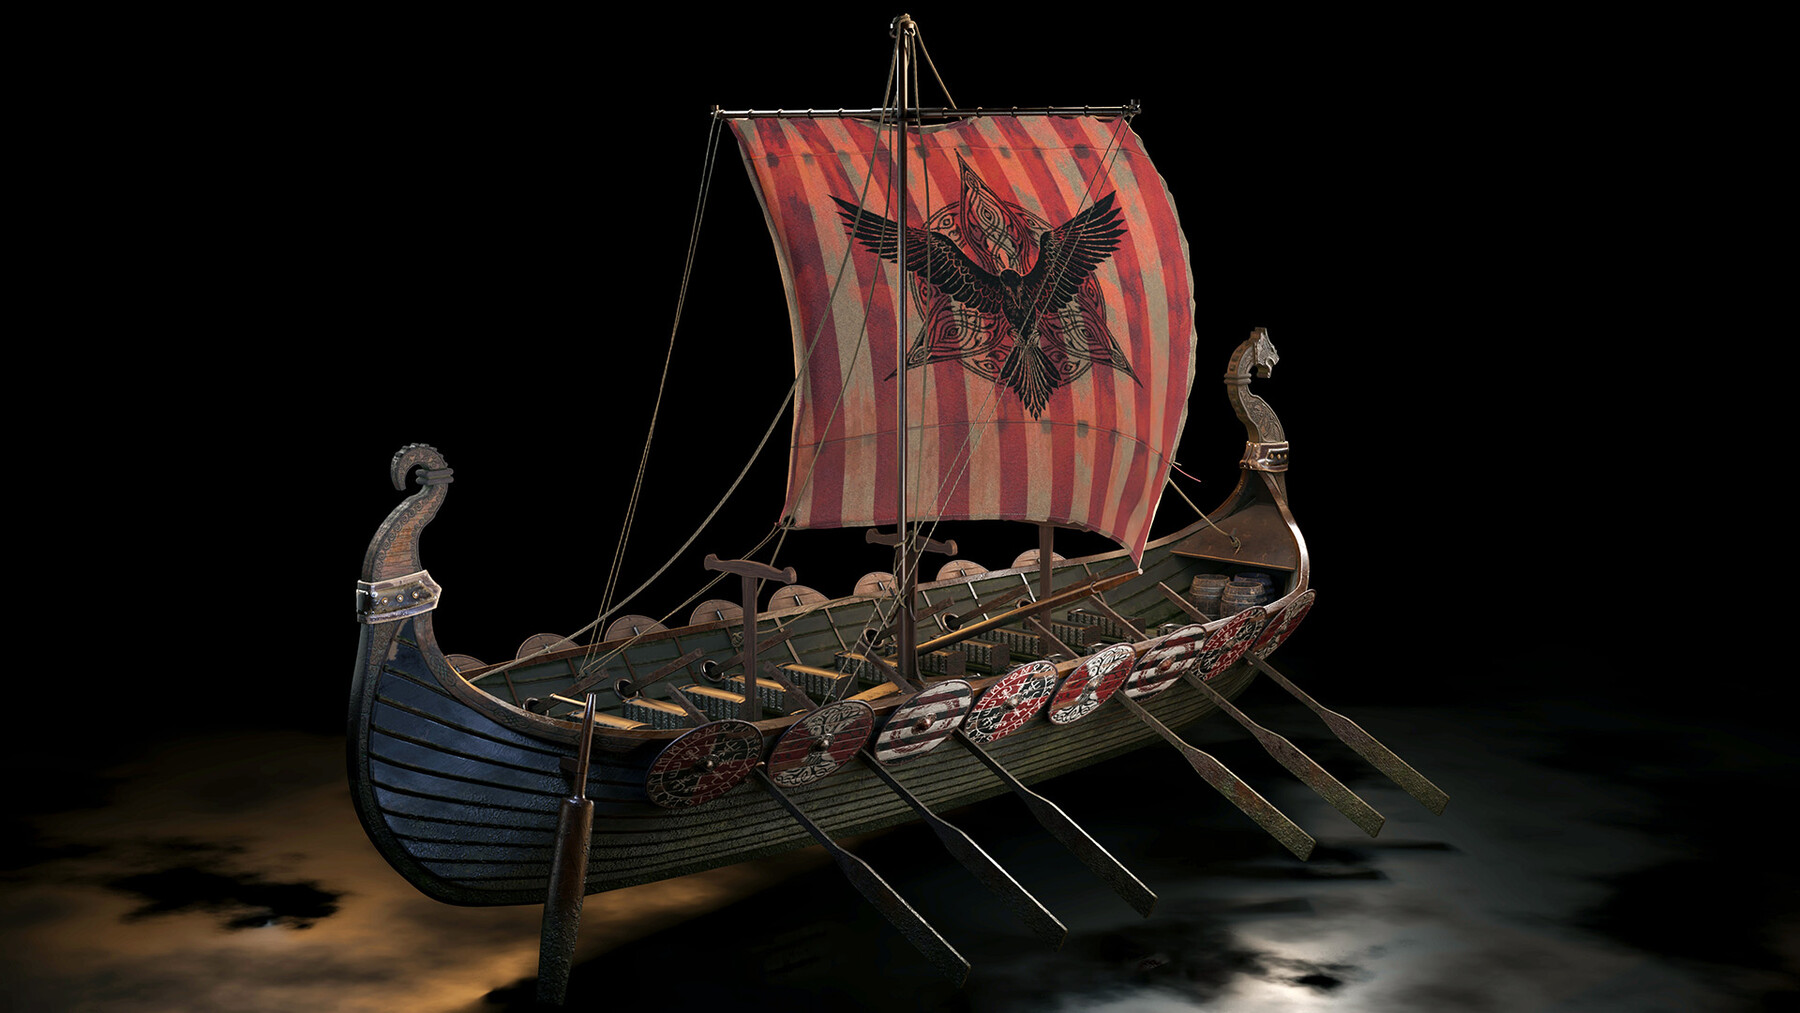 ArtStation - Viking boat decoration.